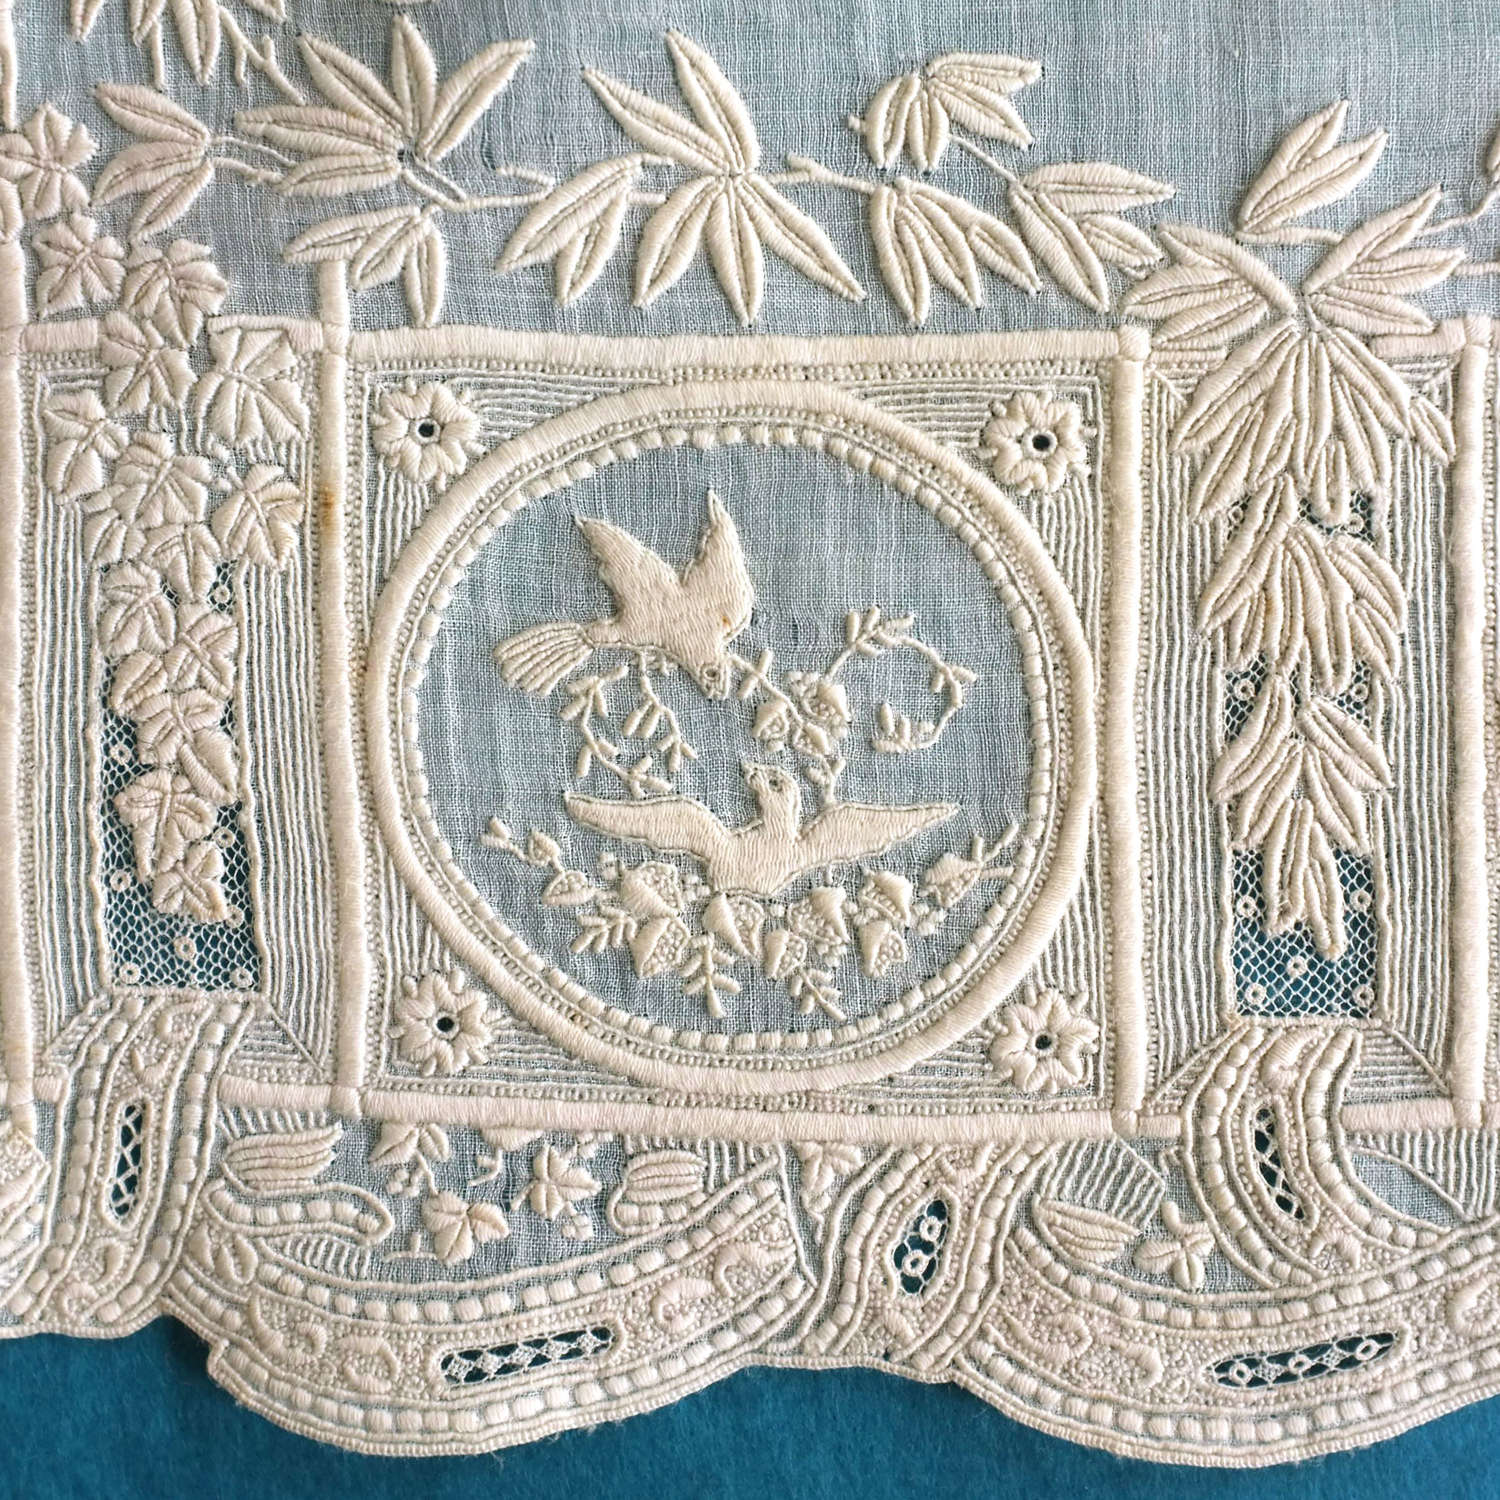 Antique Whitework Embroidered Handkerchief With Birds